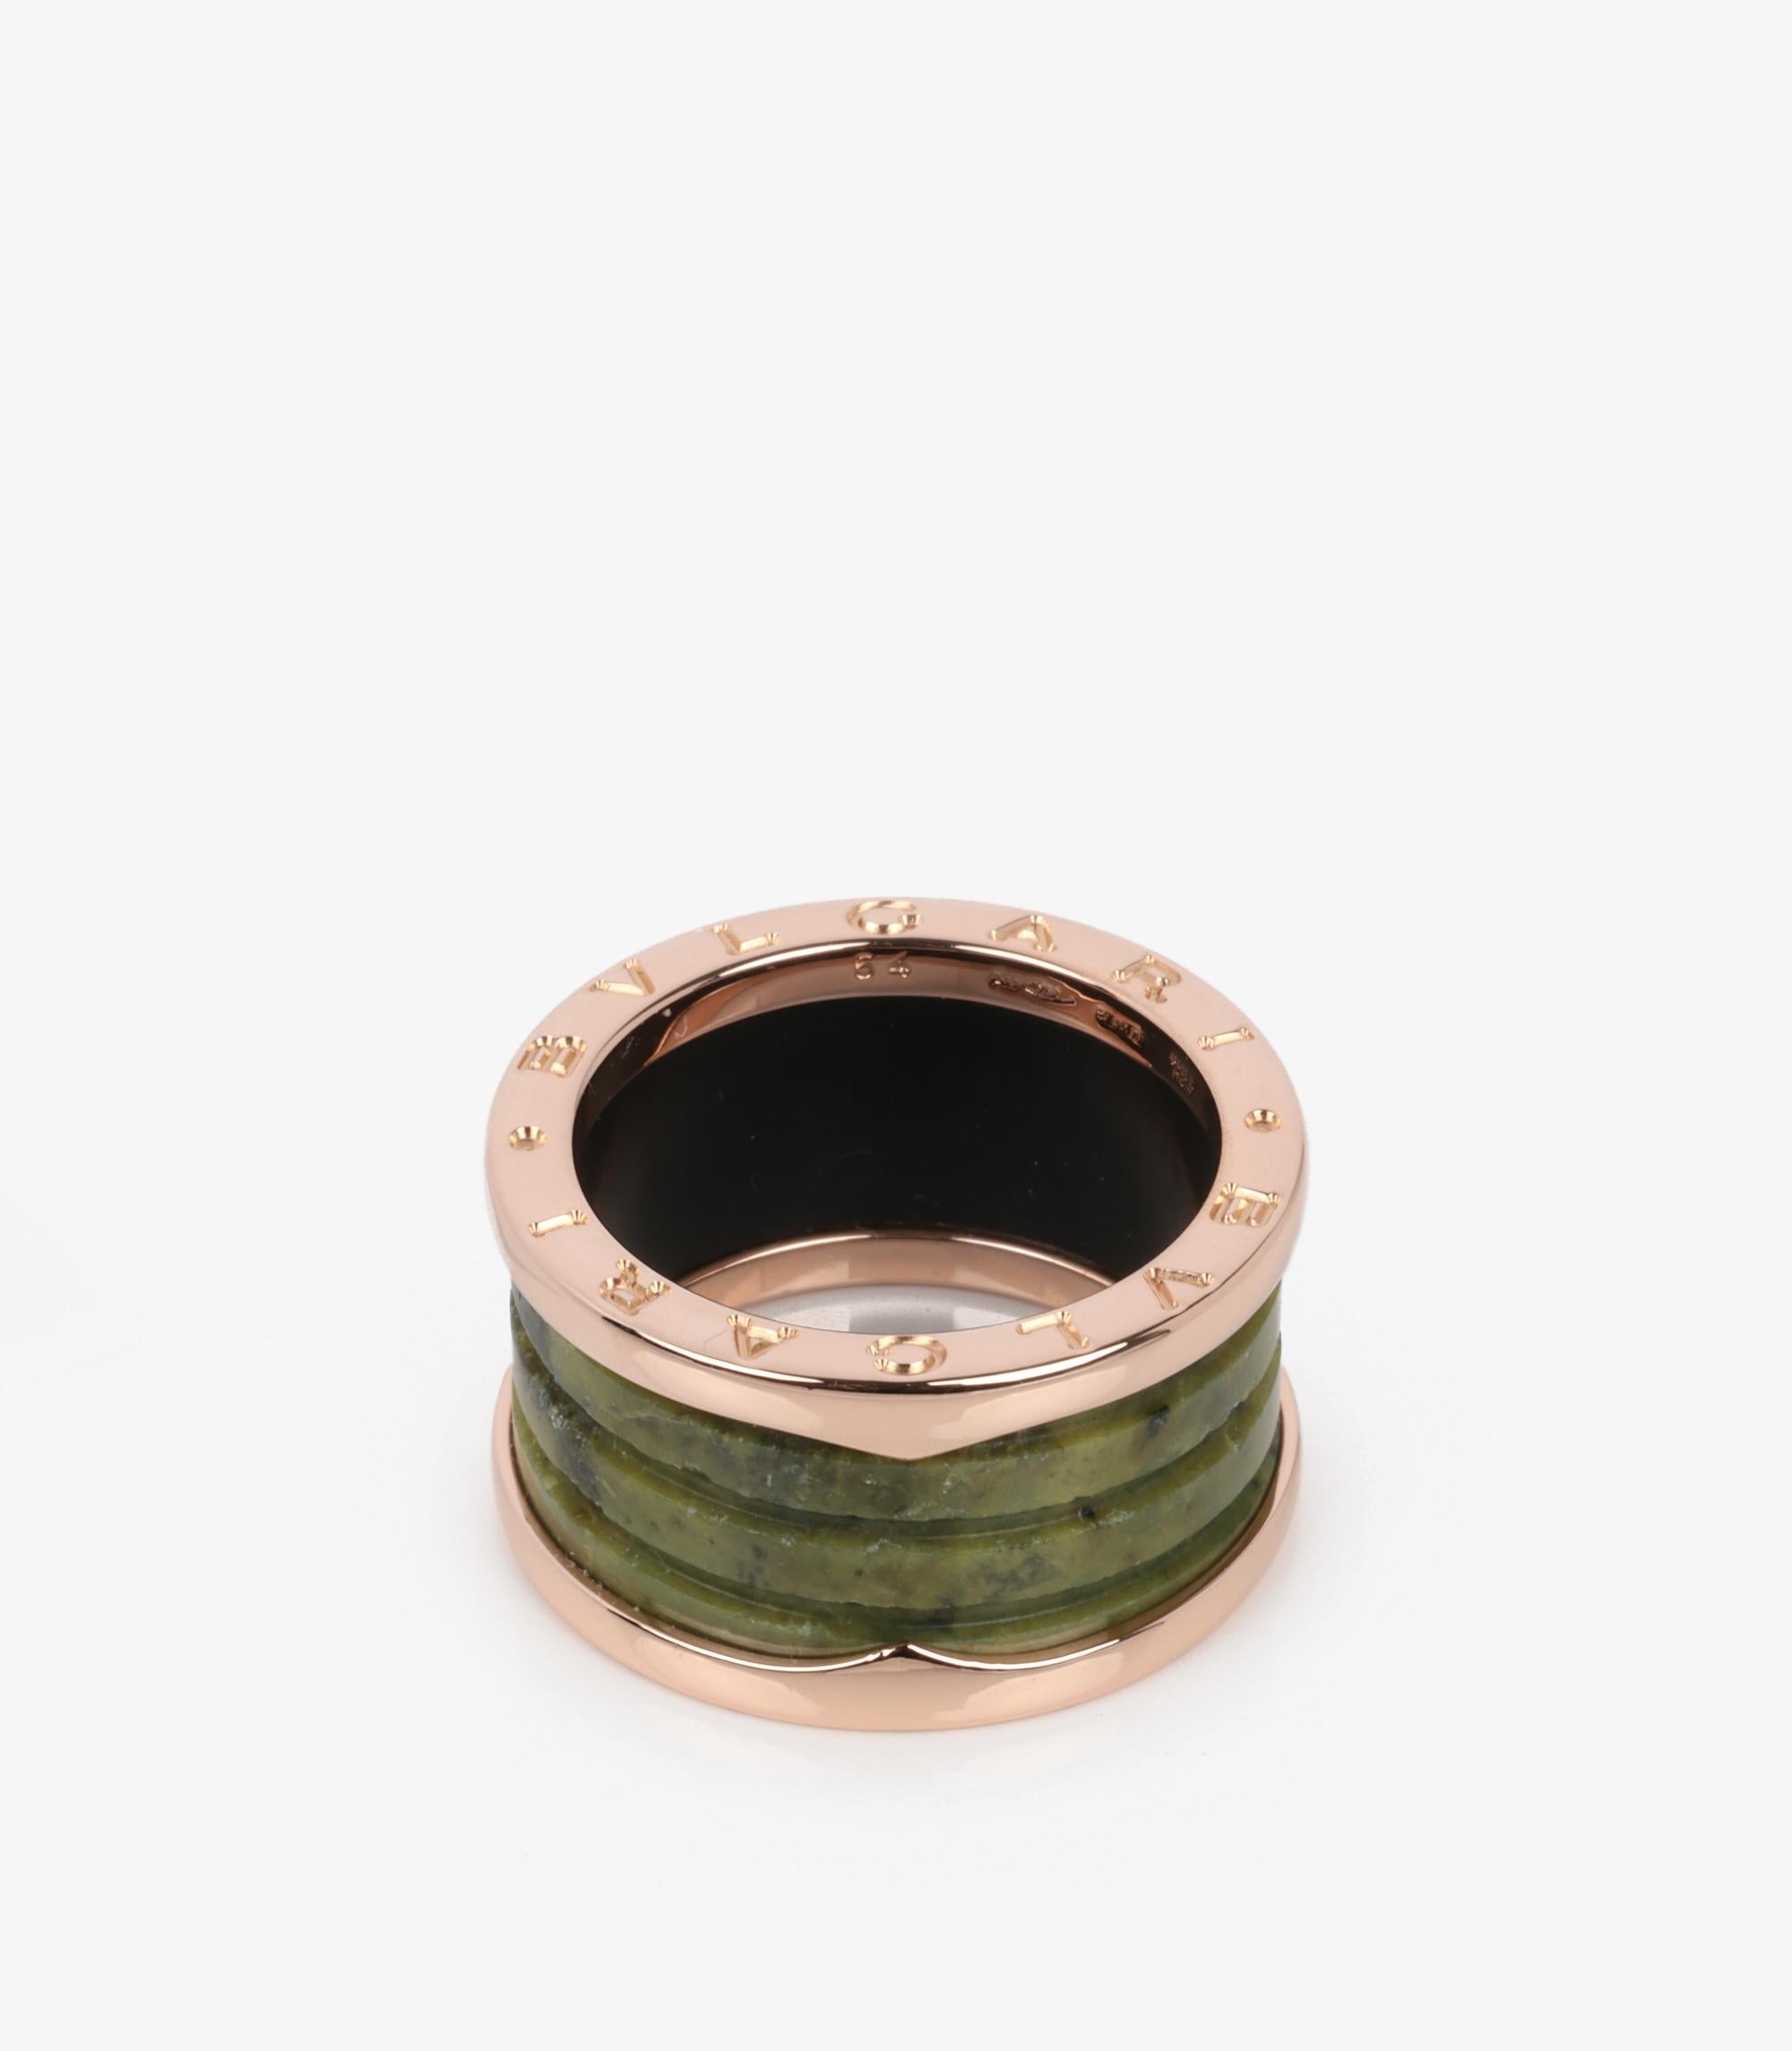 Bulgari Marble 18ct Rose Gold B.Zero1 Ring

Brand-Bulgari
Model- Marble B.zero1 Ring
Product Type- Ring
Serial Number- AY****
Age- Circa 2012
Accompanied By- Bulgari Box, Certificate, Receipt
Material(s)- 18ct Rose Gold
Gemstone- Marble
UK Ring